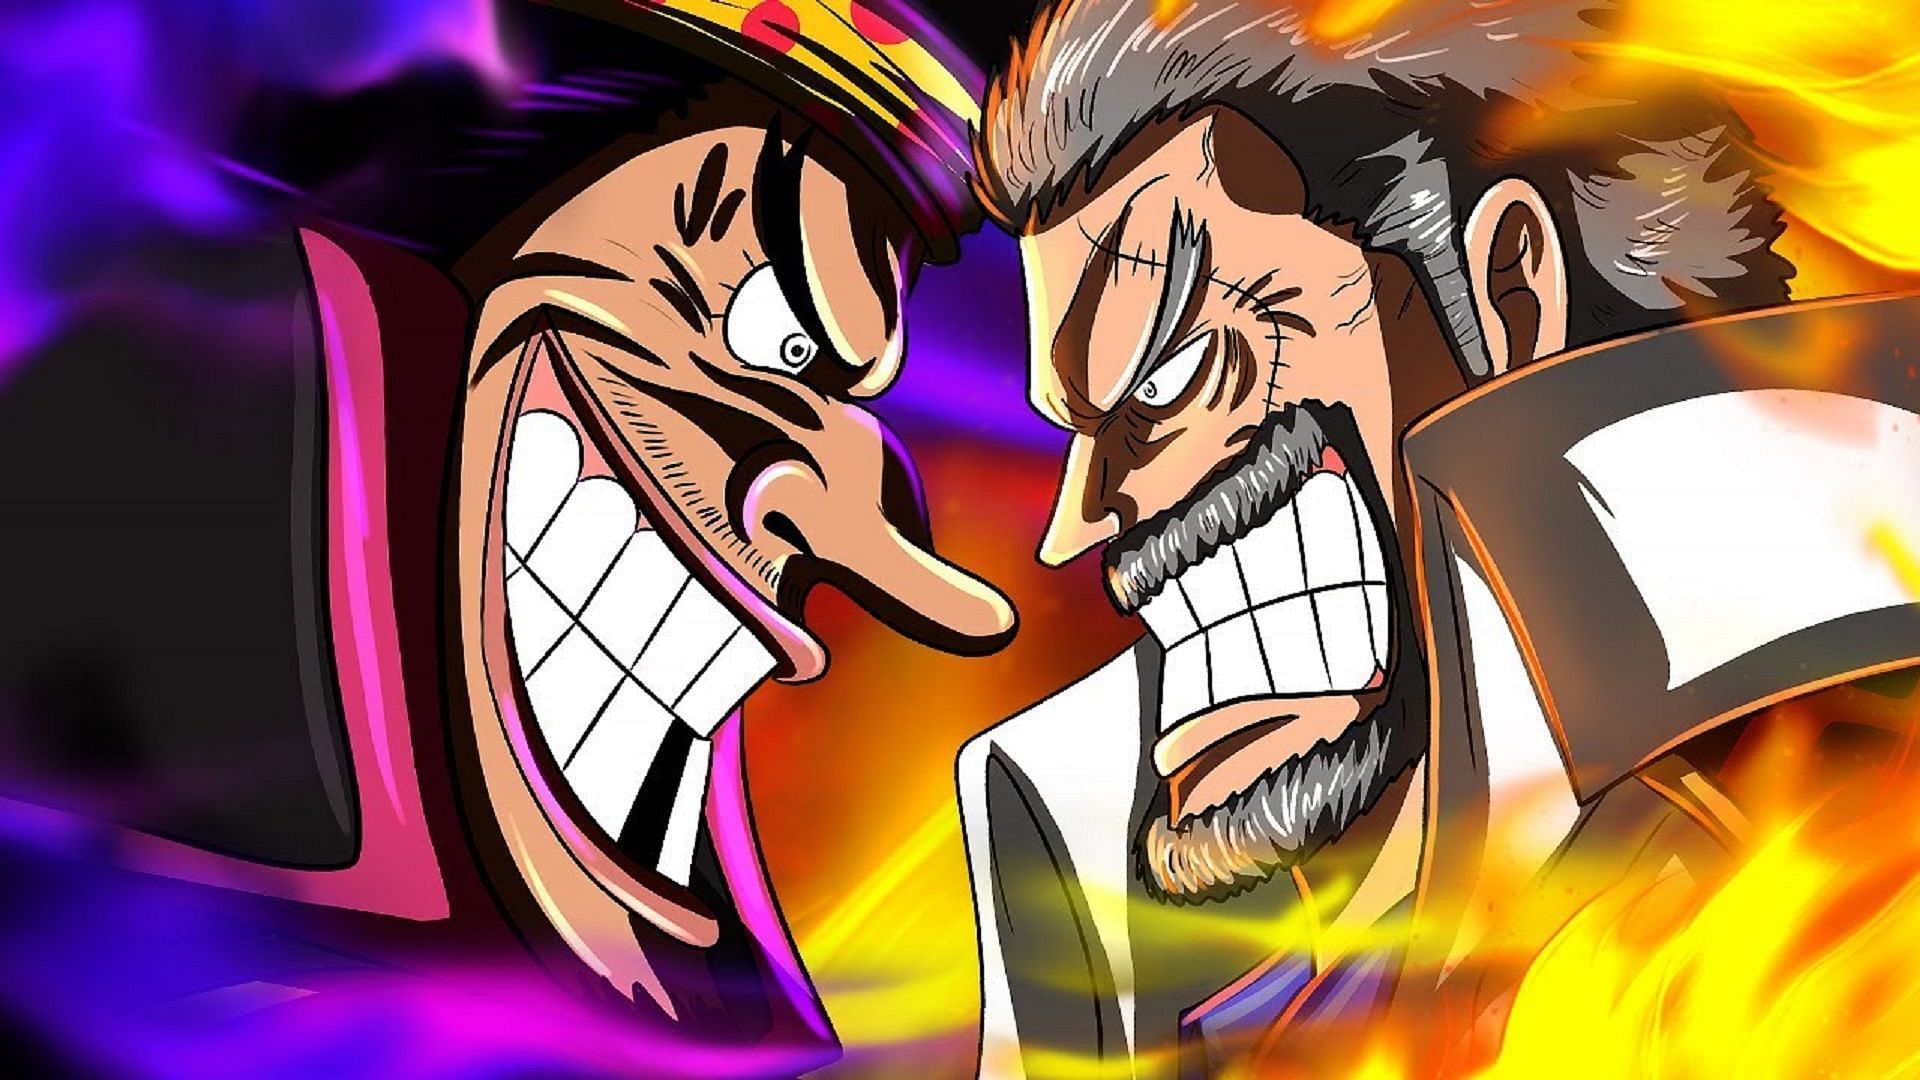 To rescue Koby, Garp is ready to face the frightening Blackbeard (Image via Eiichiro Oda/Shueisha, One Piece)